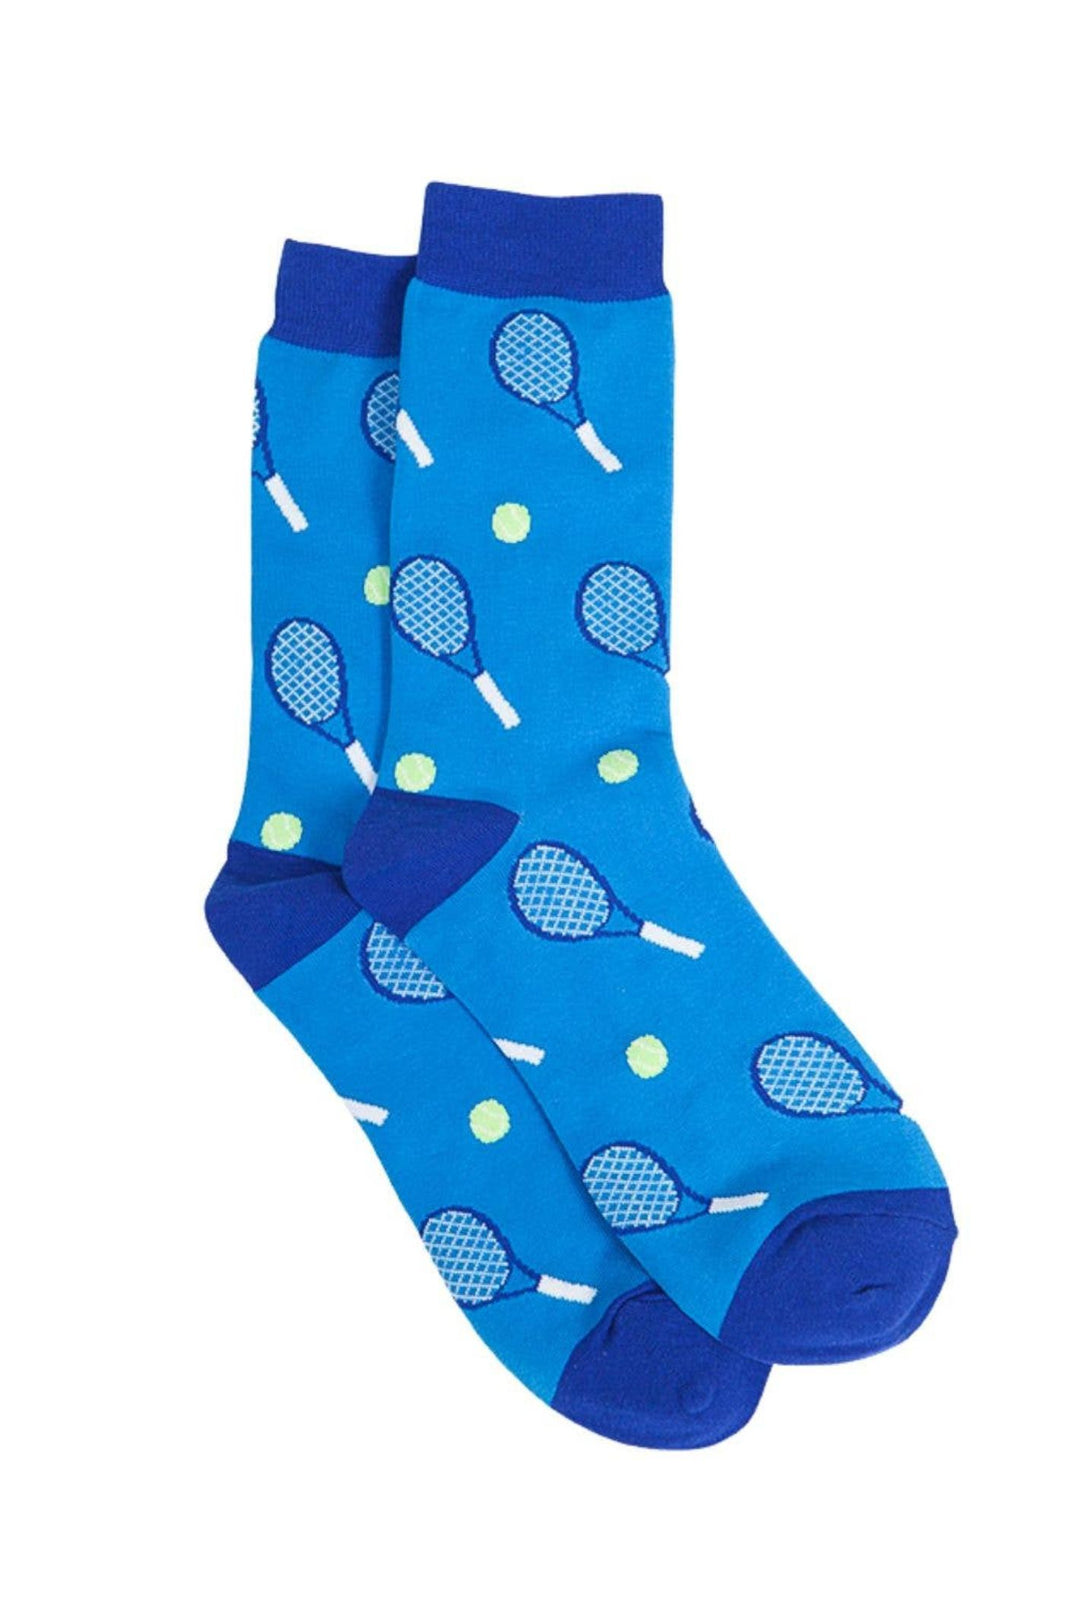 Blue Mens Bamboo Tennis Socks Novelty Sports Socks